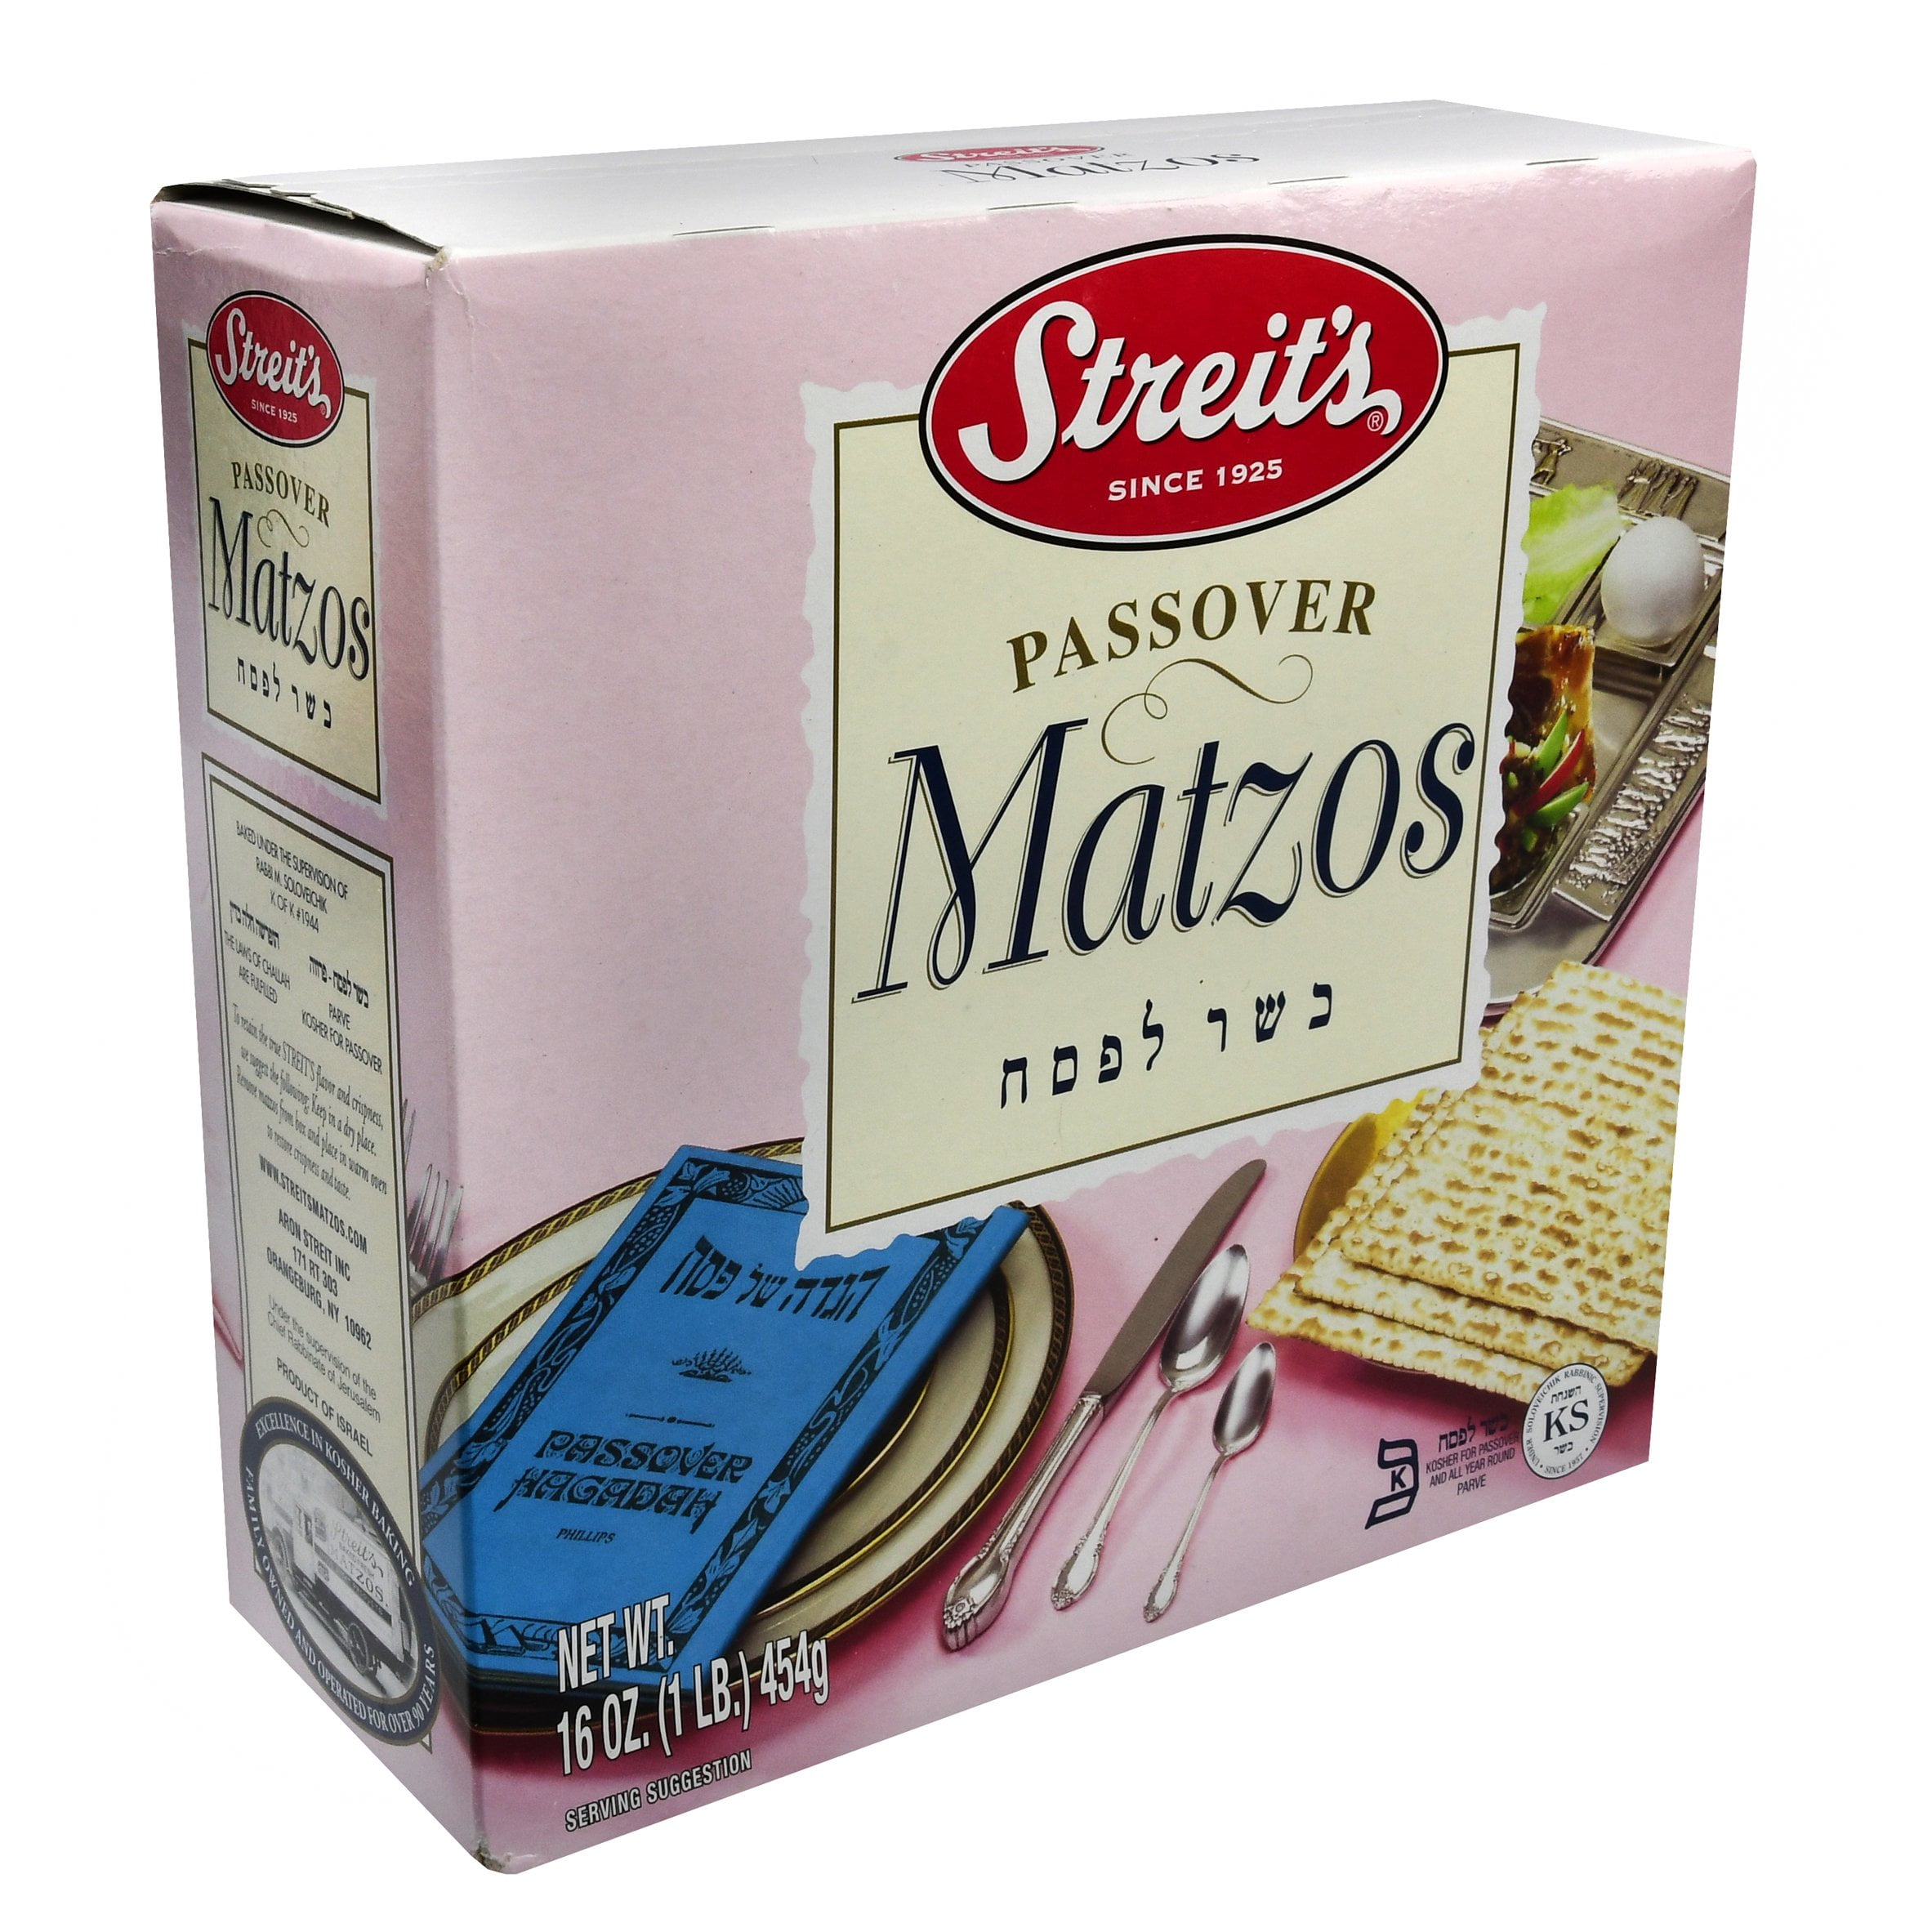 Streits Bakery Passover Edition Mandel Toast, Plain, Kosher